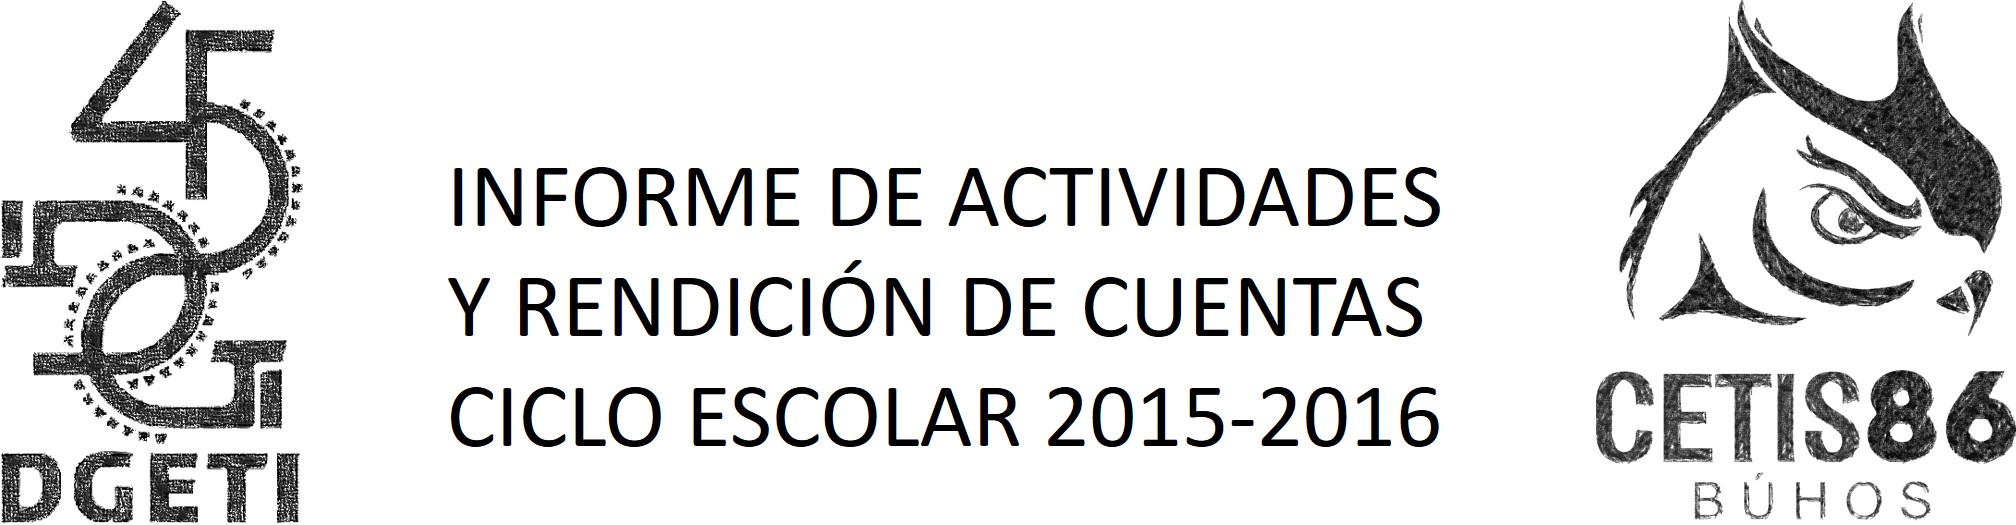 informe-2015-2016